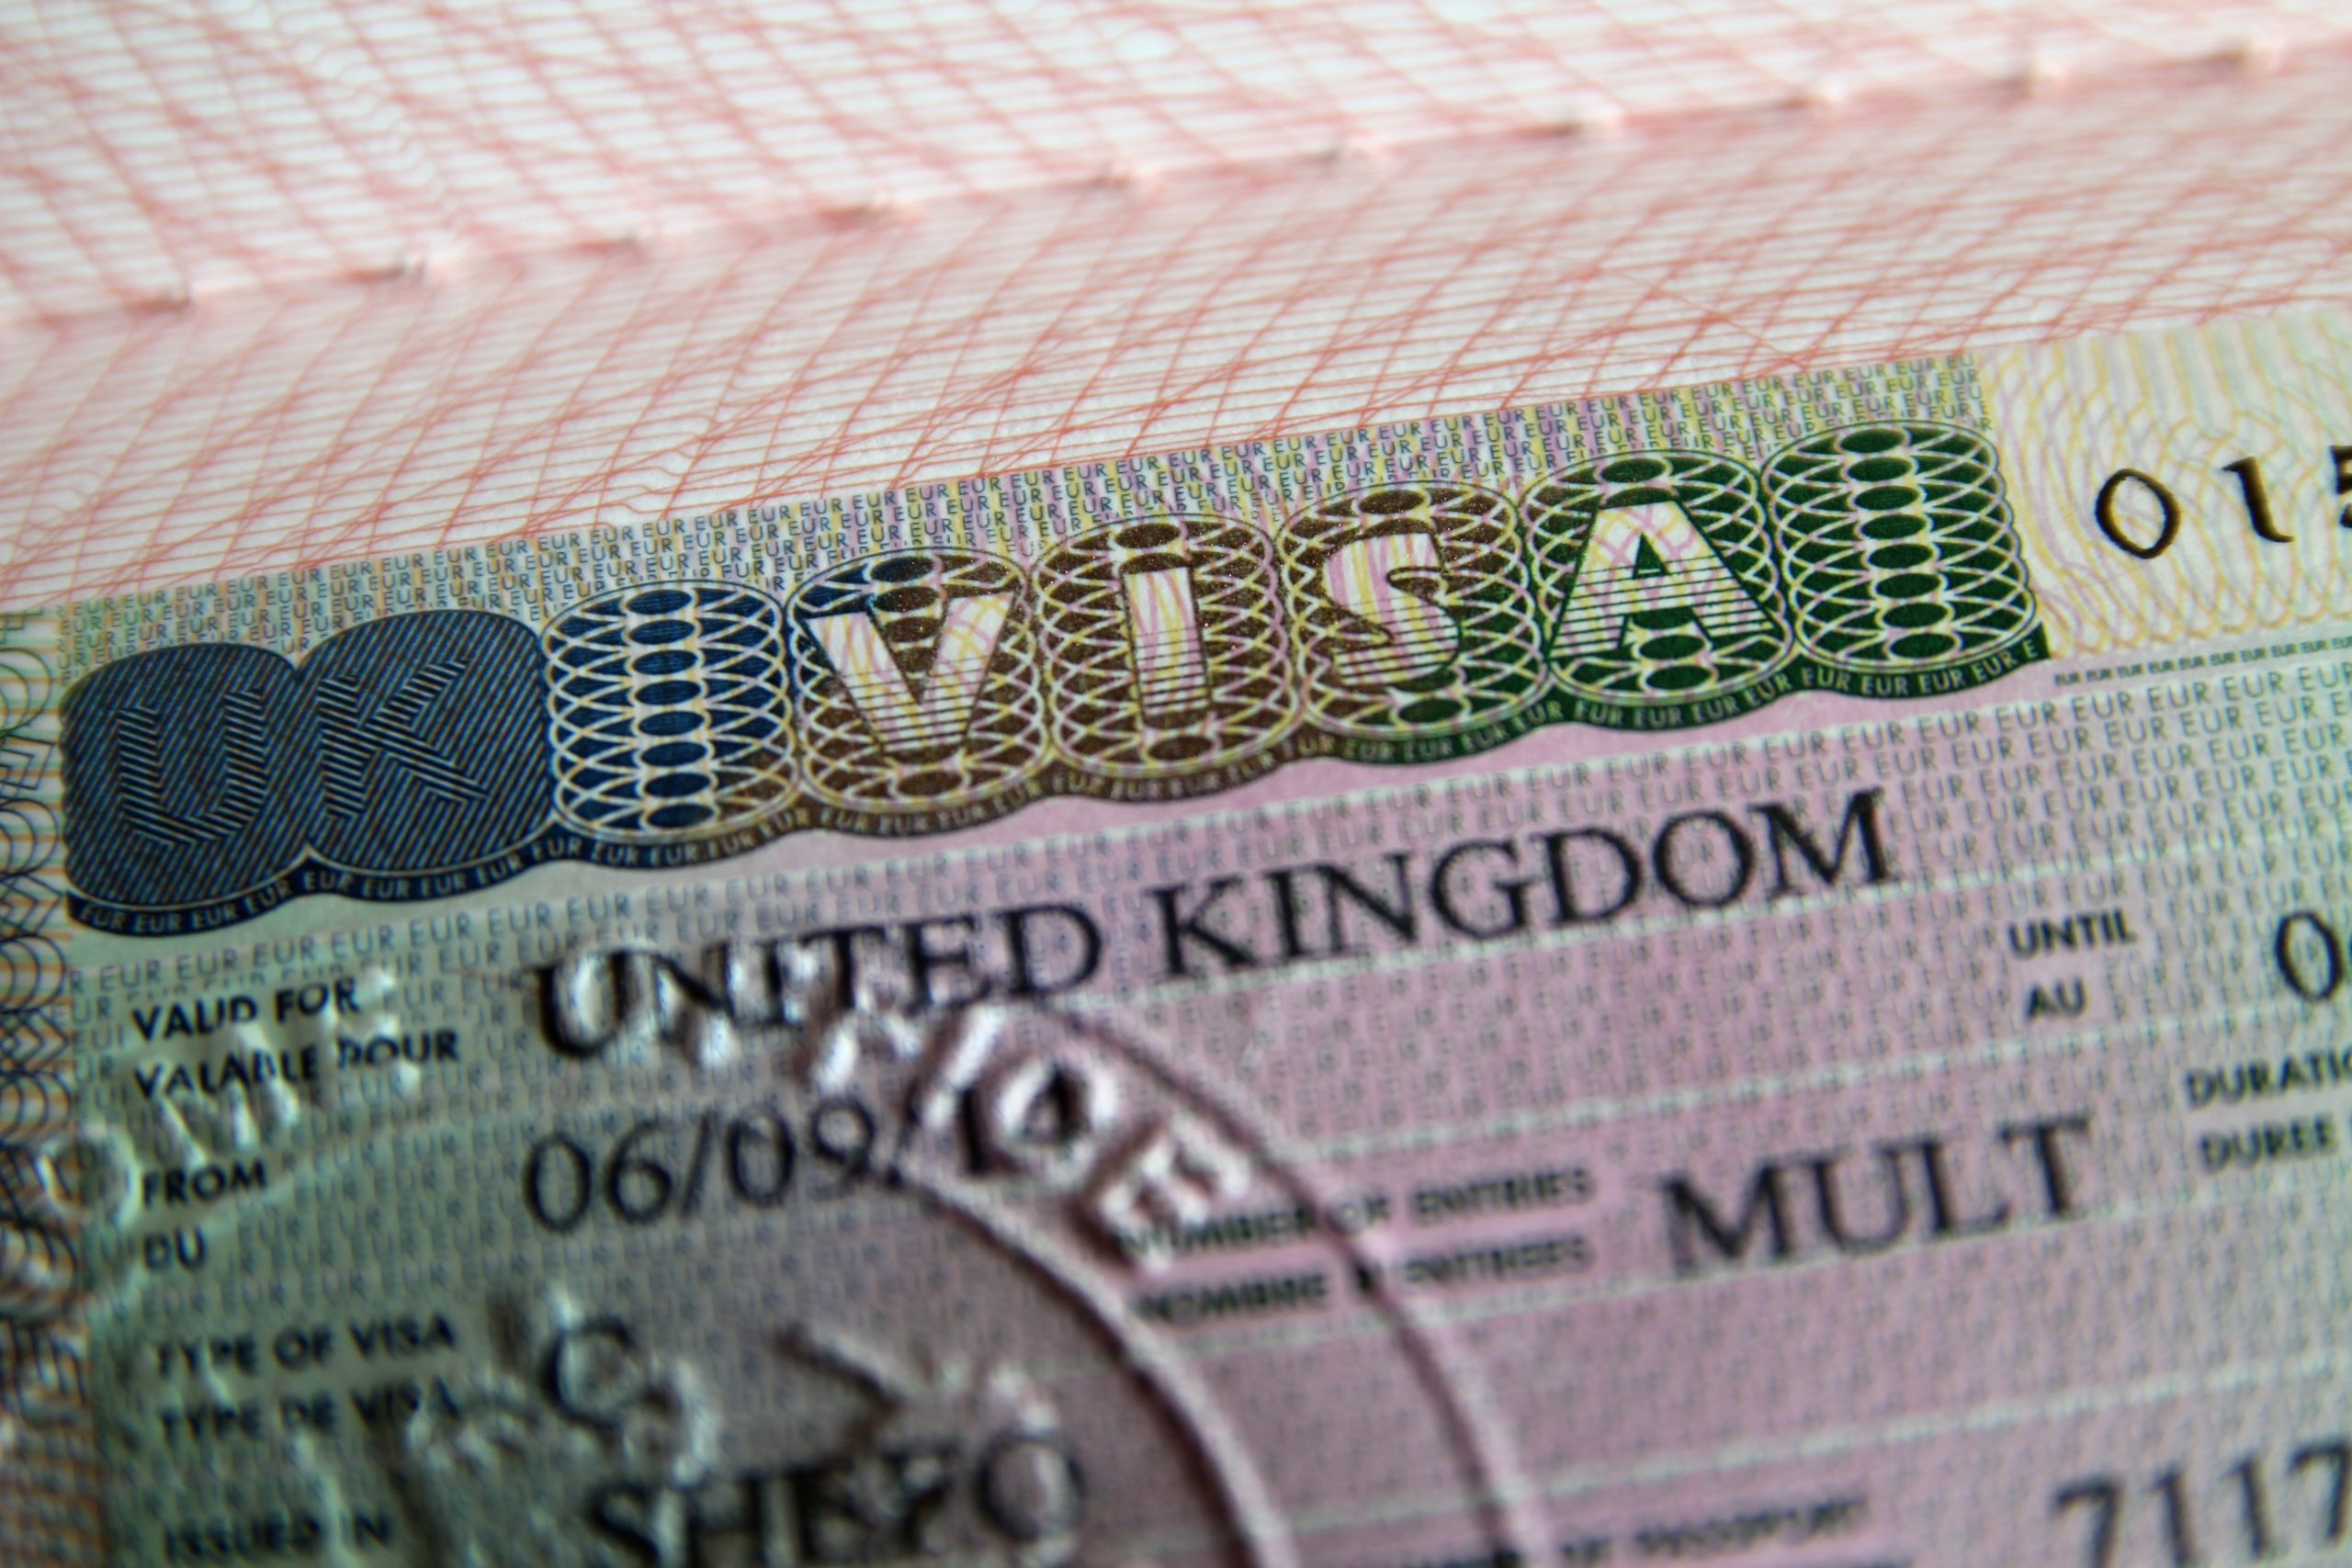 United Kingdom visa in passport scaled 1